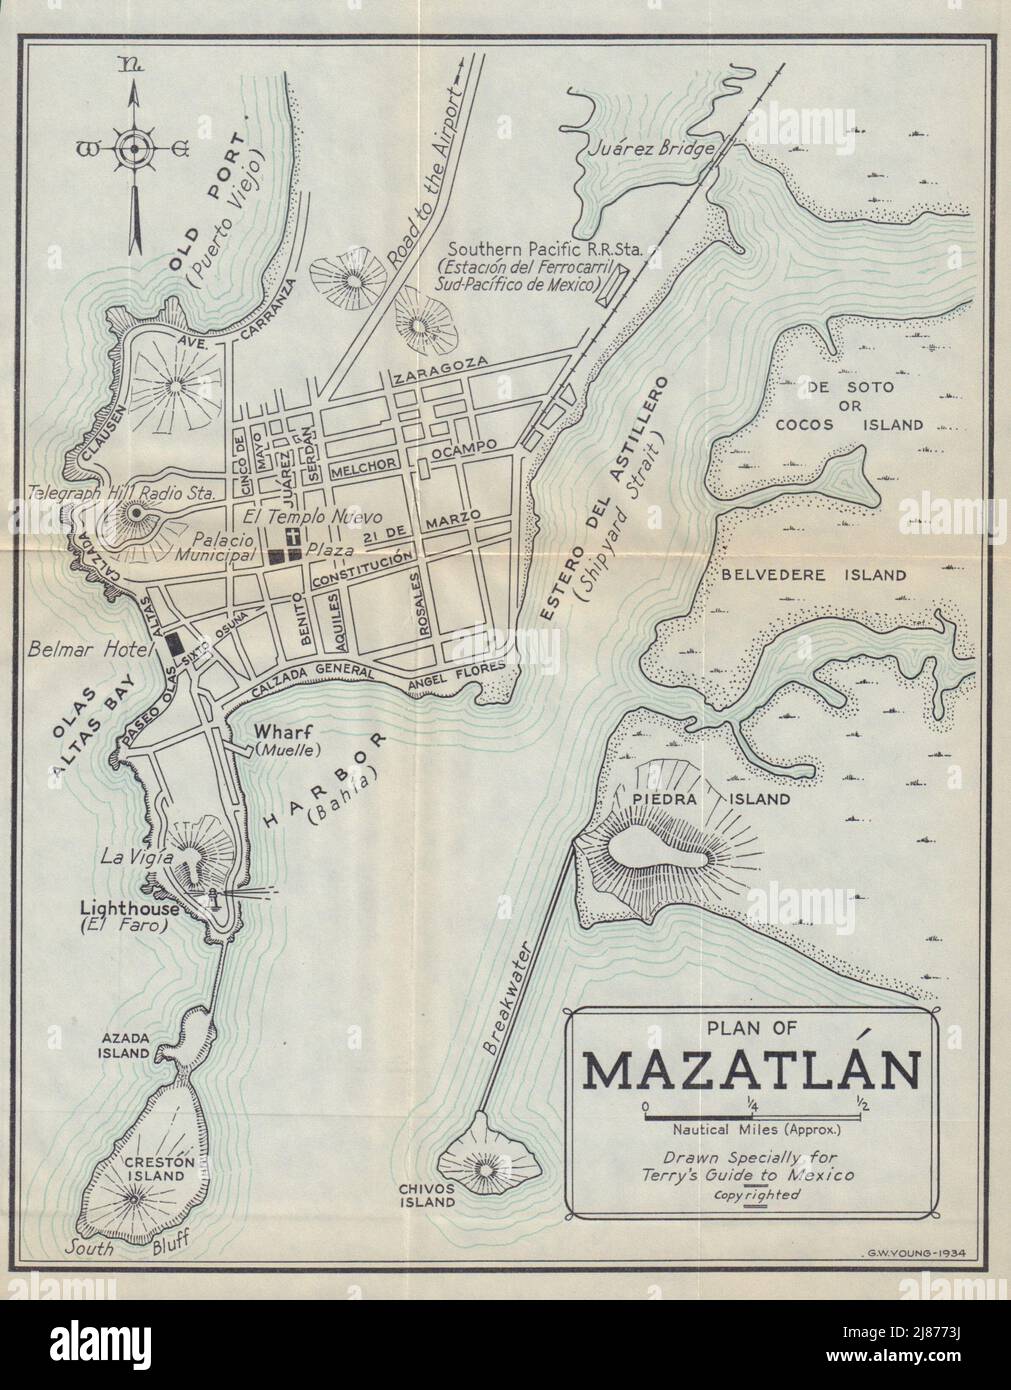 Plan of MAZATLAN, Mexico. Mapa de la ciudad. City/town plan 1938 old Stock Photo